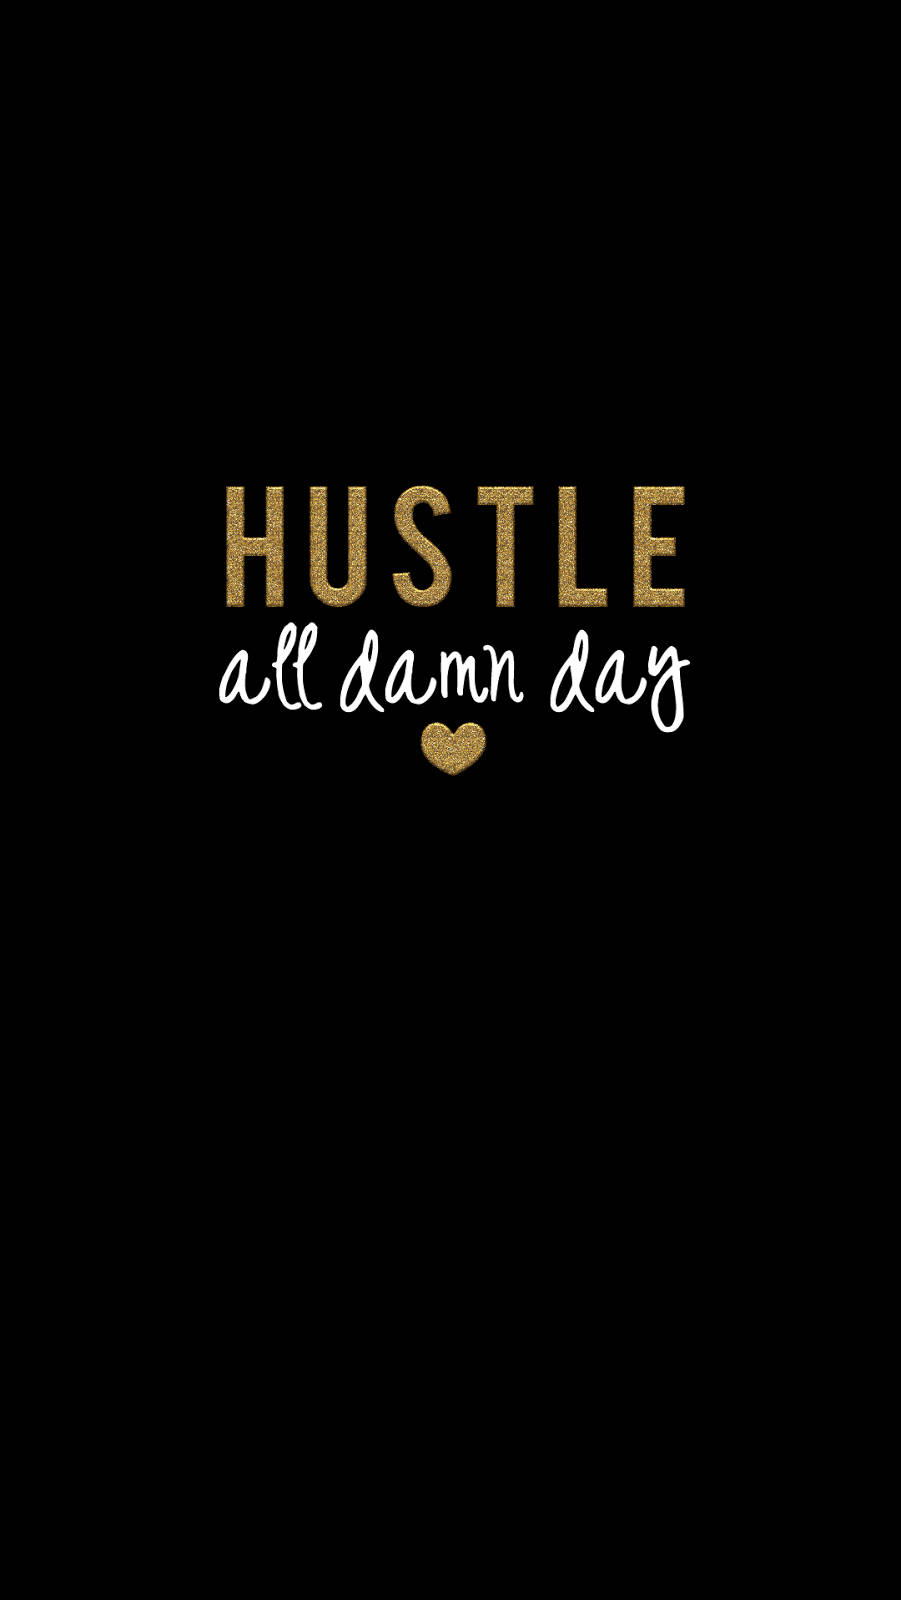 Work Hustle Hard Wallpaper